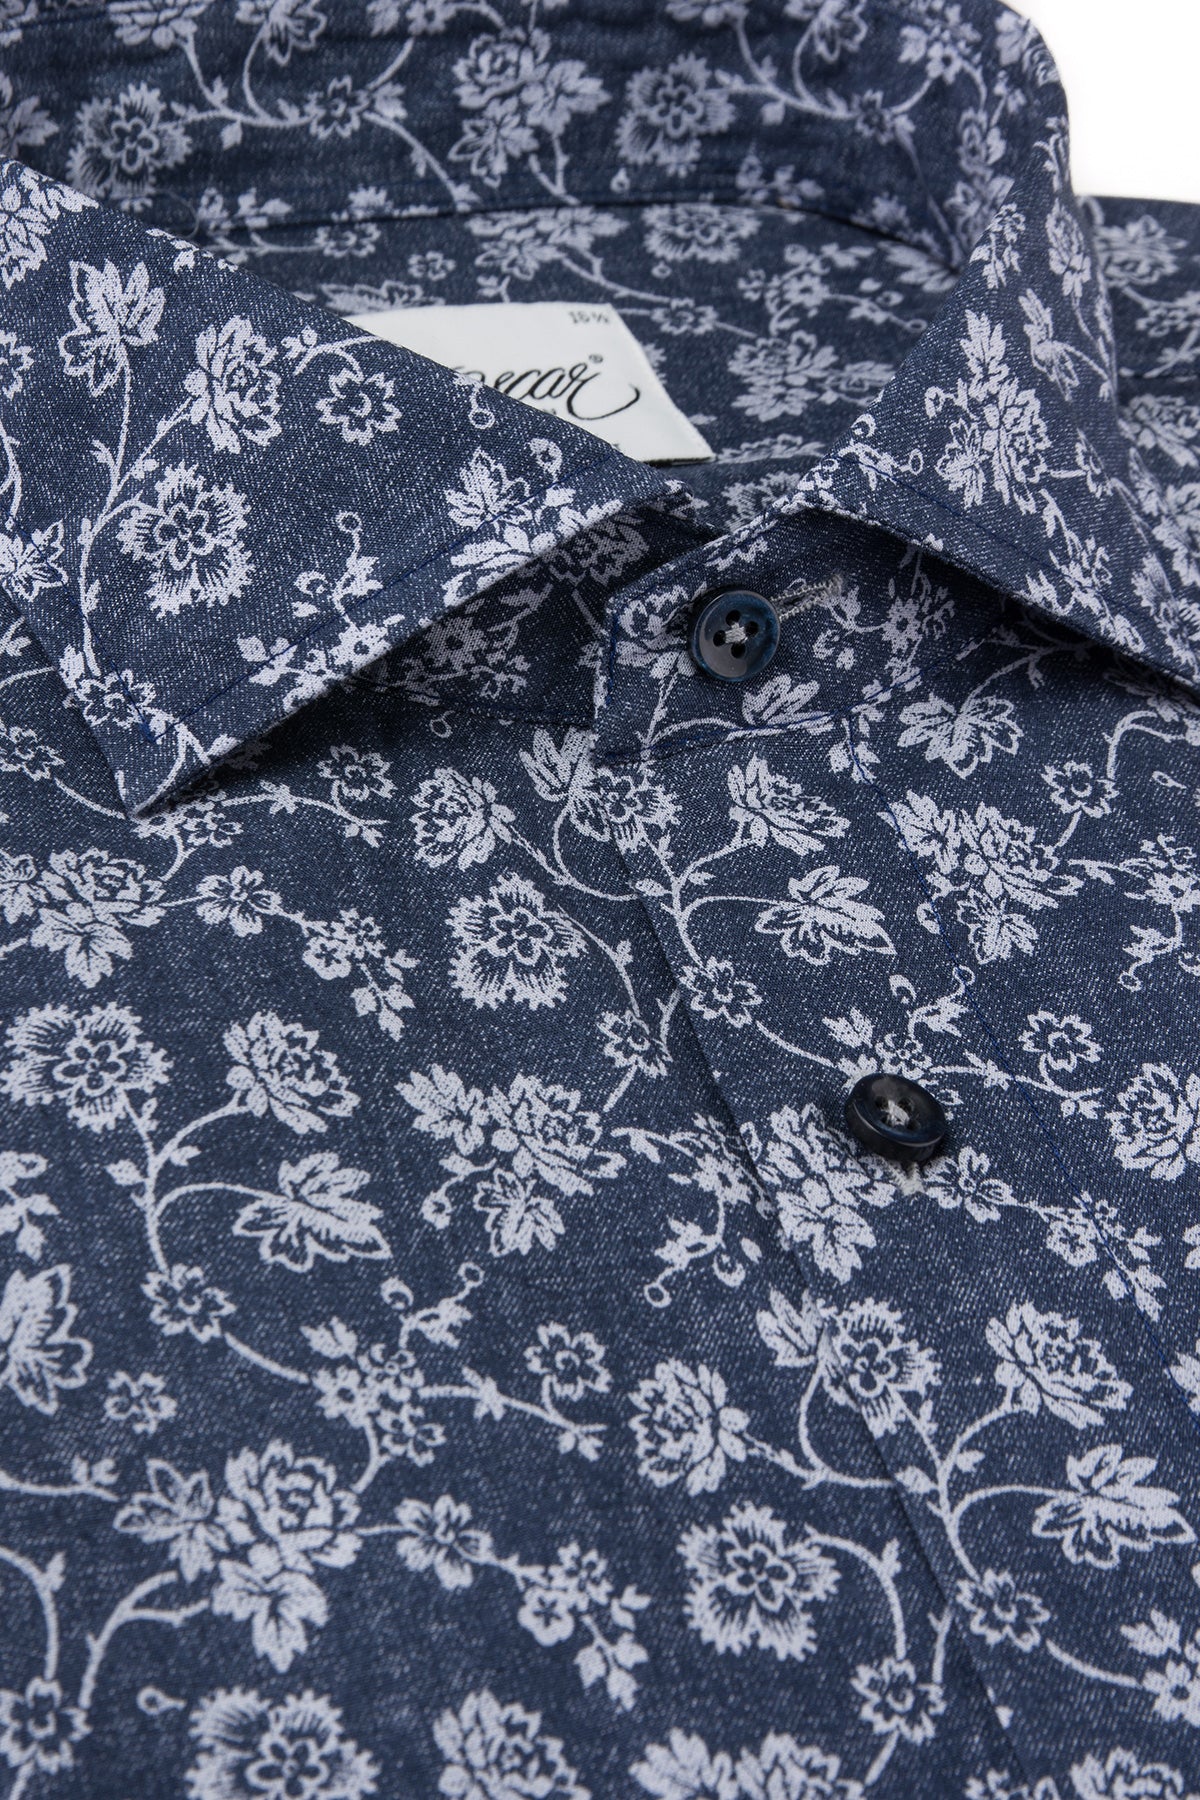 Indigo blue flower printed regular fit shirt